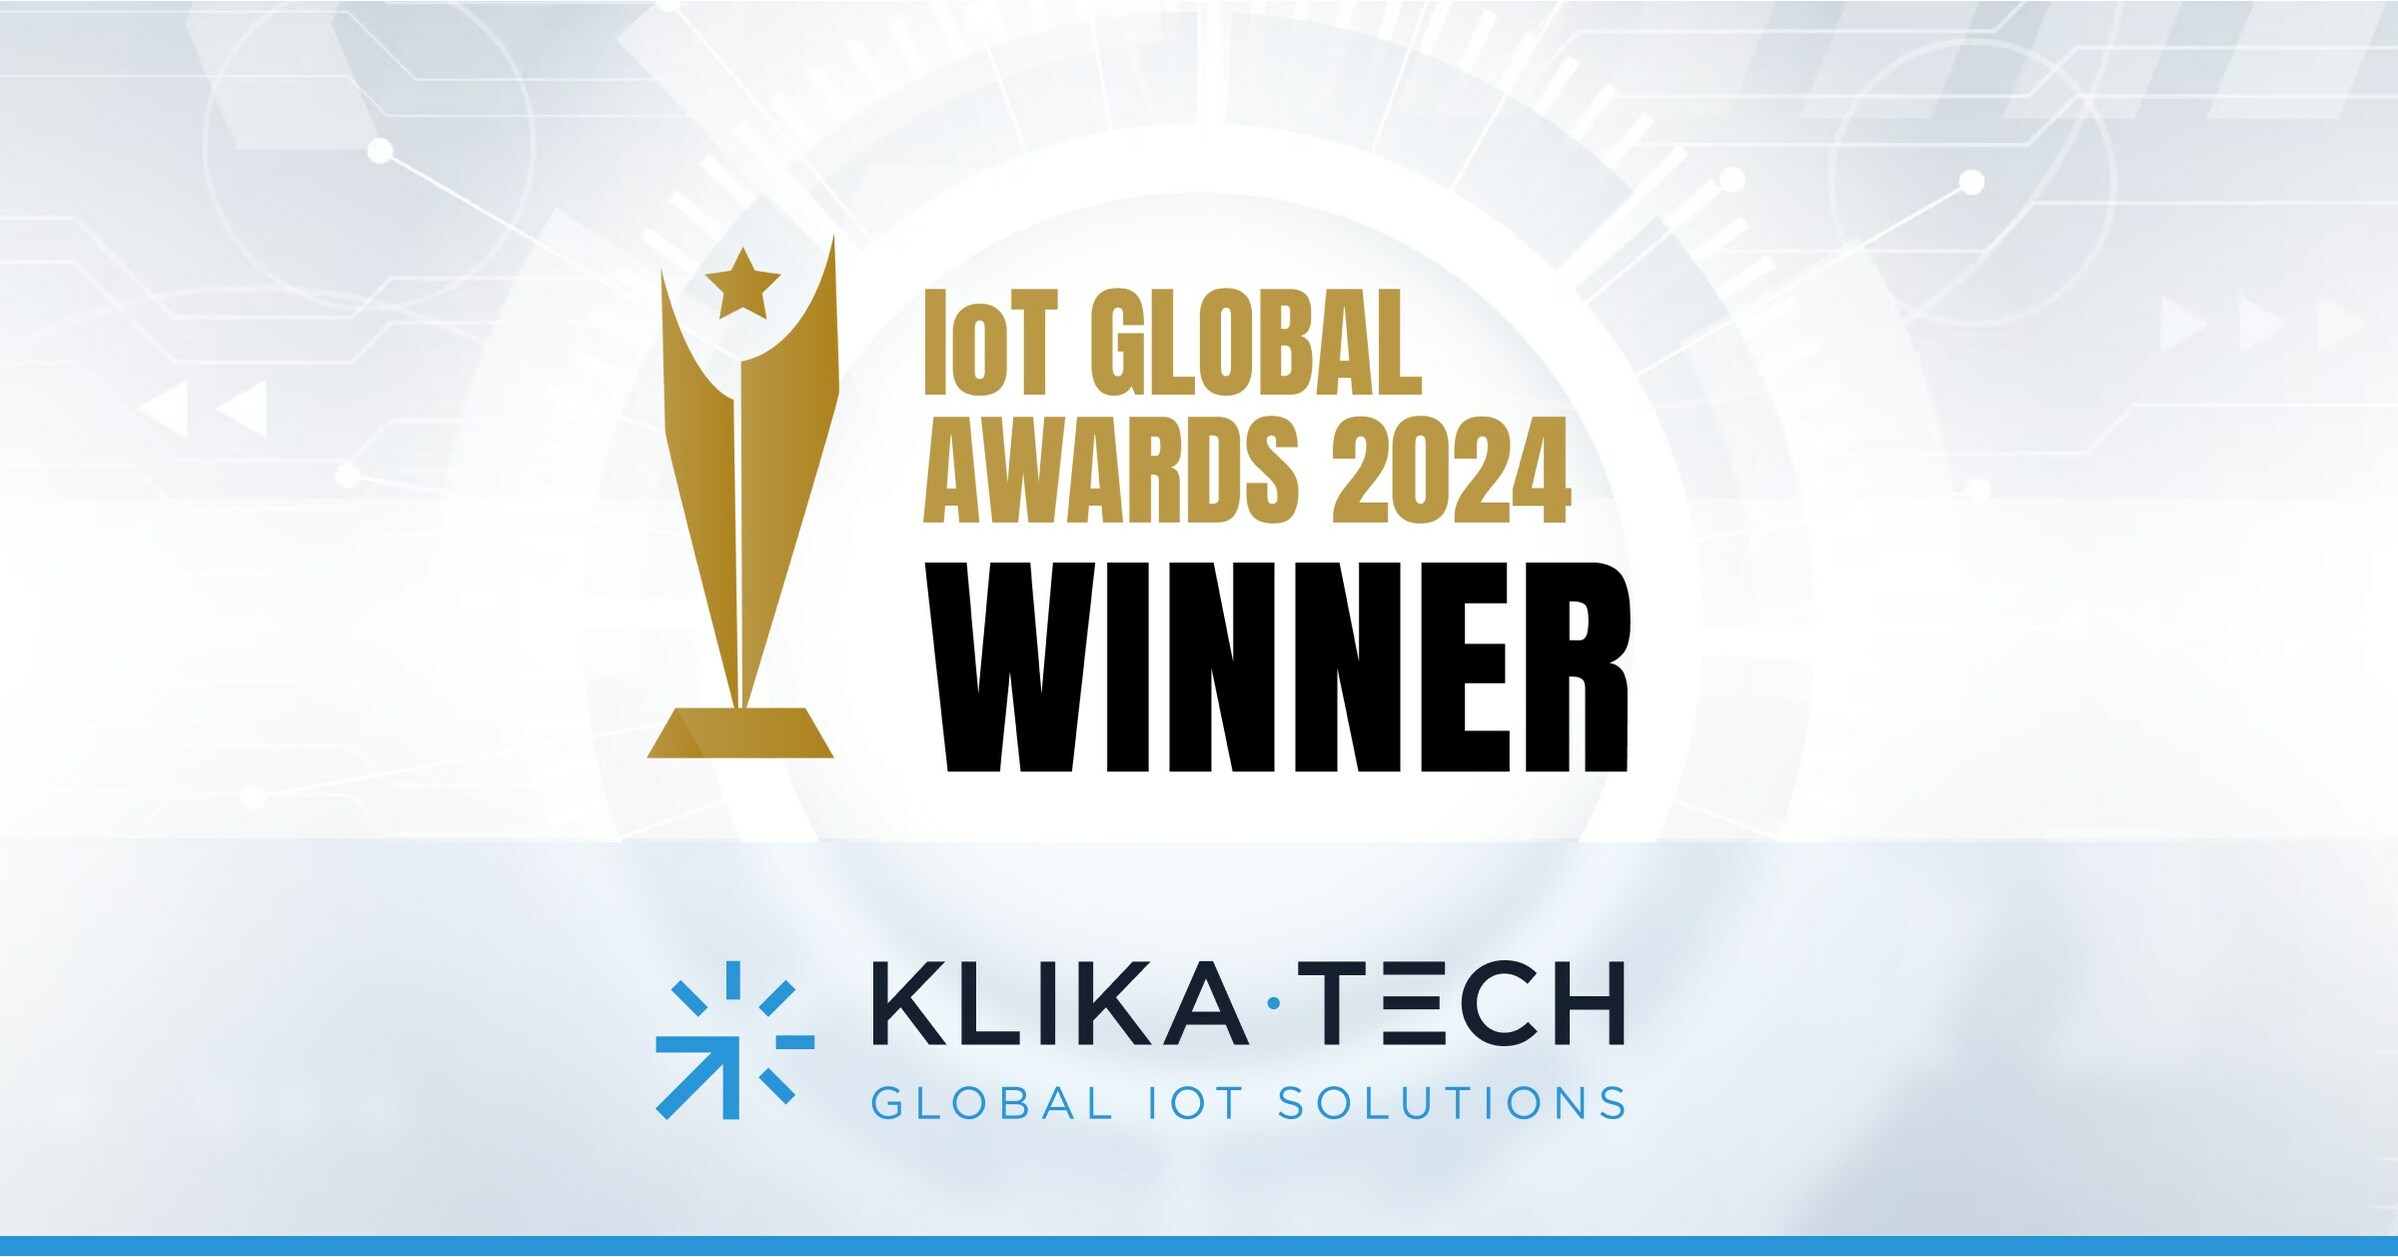 Klika Tech’s Innovative Subeca Smart Water Metering Solution Wins 2024 Smart City Award from IoT Global